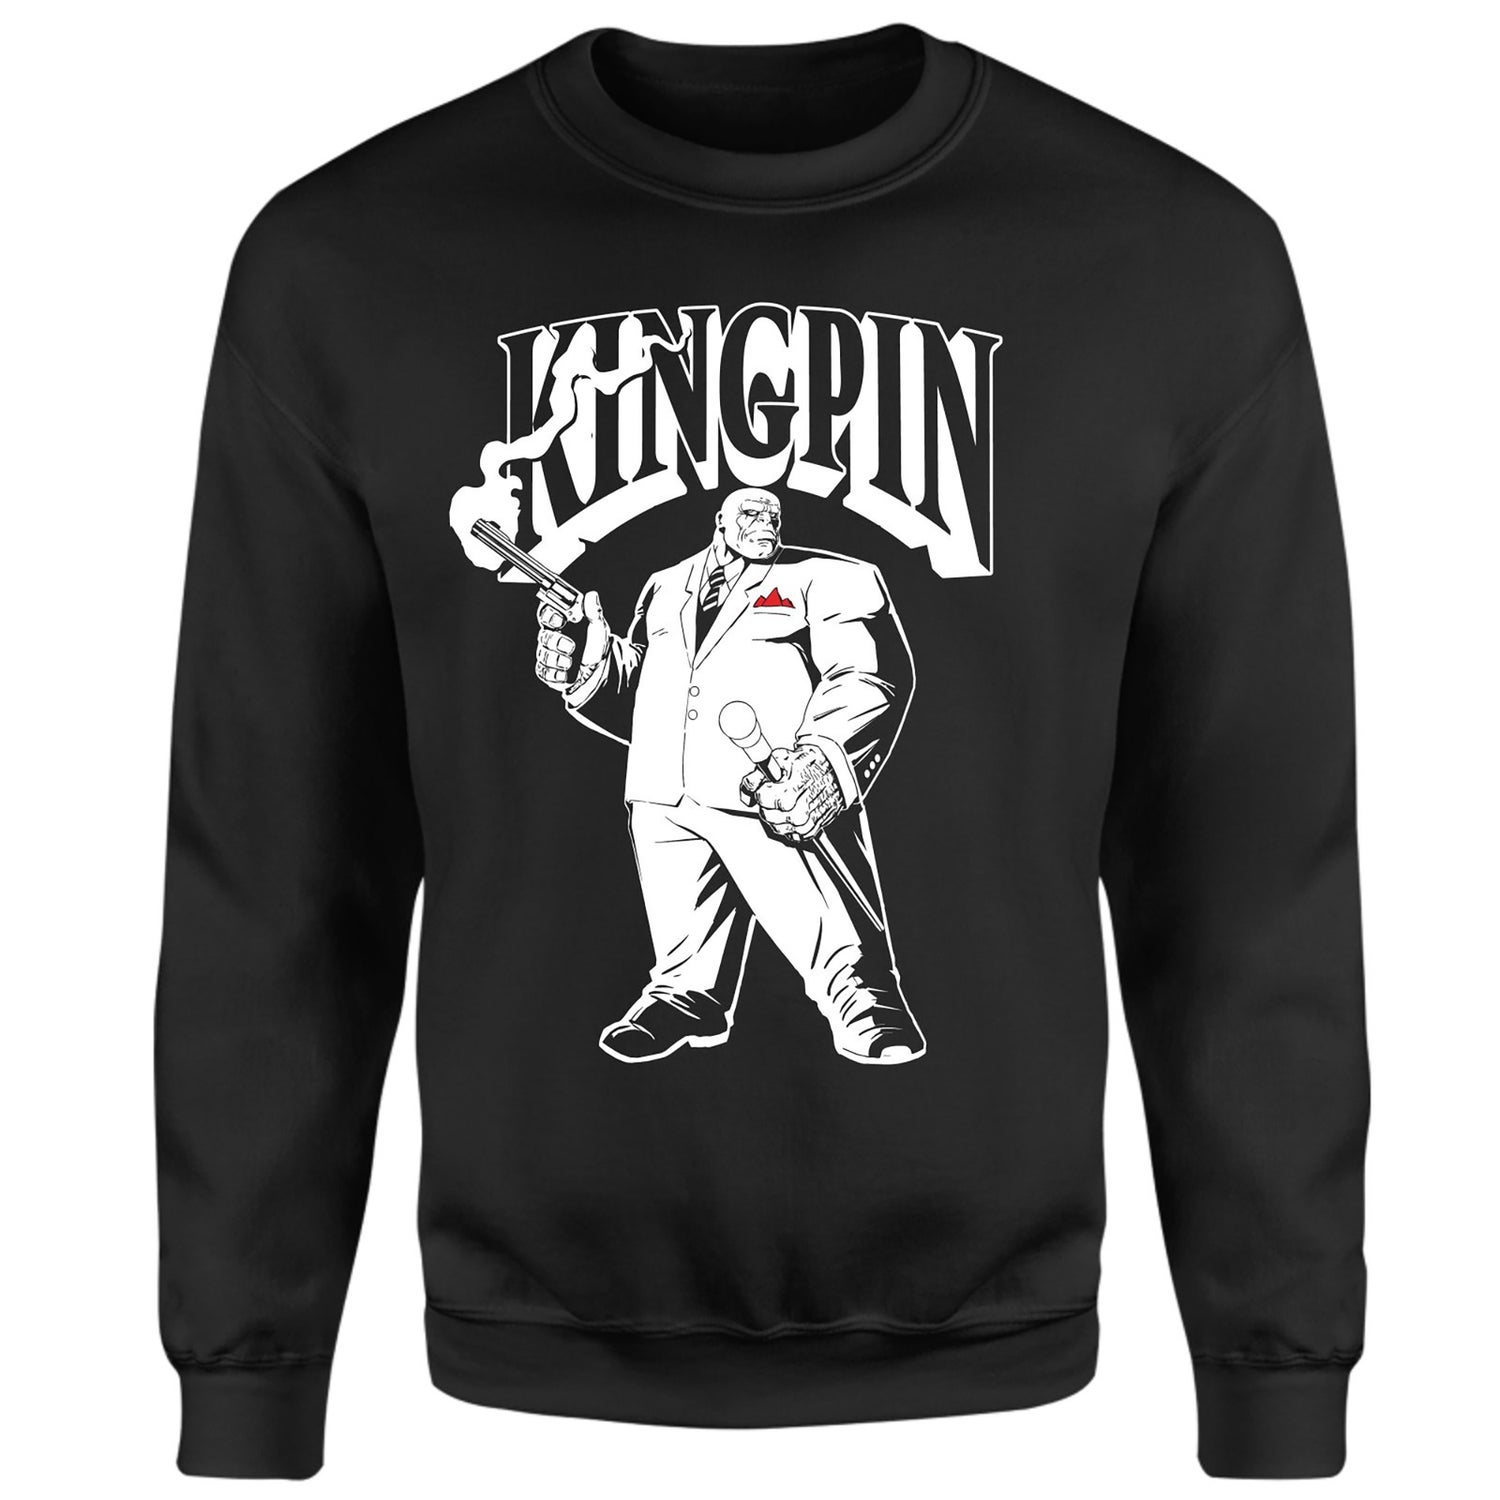 Kingpin Of Crime Sweatshirt - Black